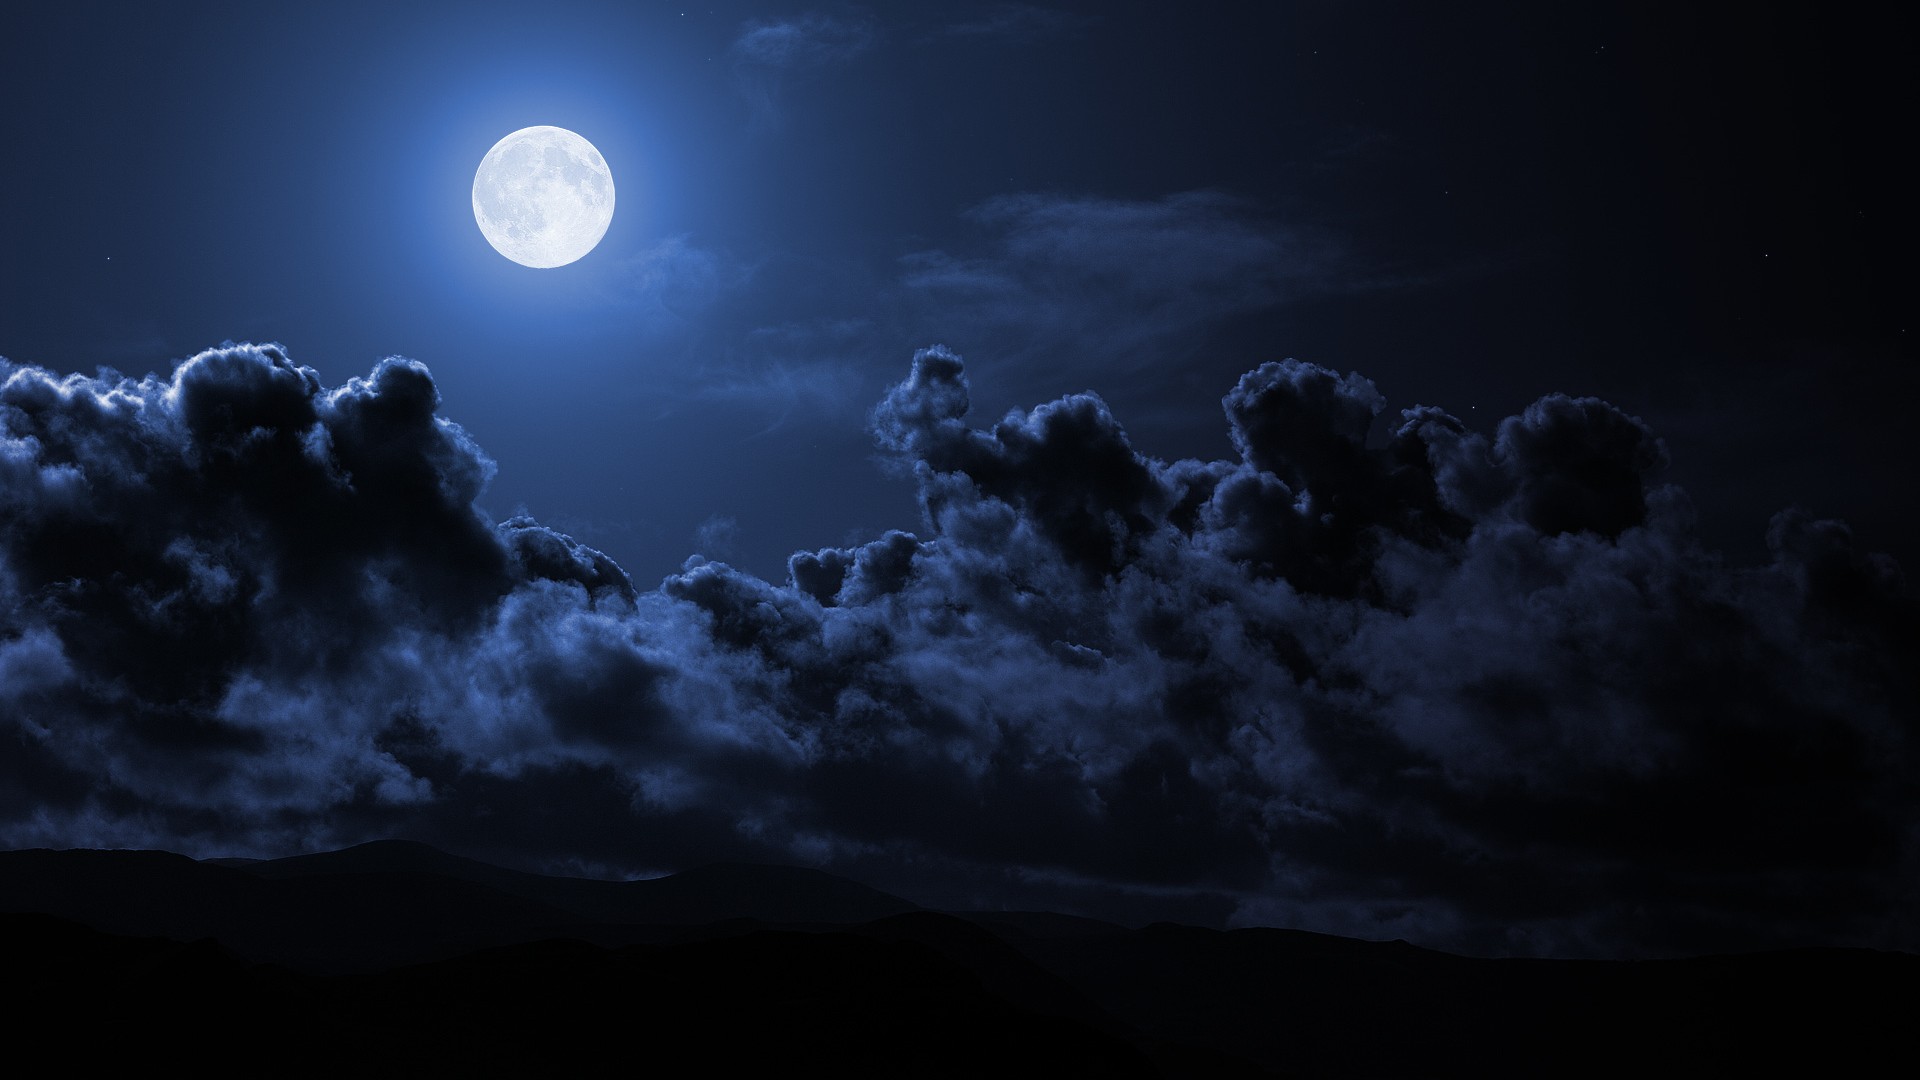 General 1920x1080 night Moon sky clouds dark blue hills landscape storm digital art